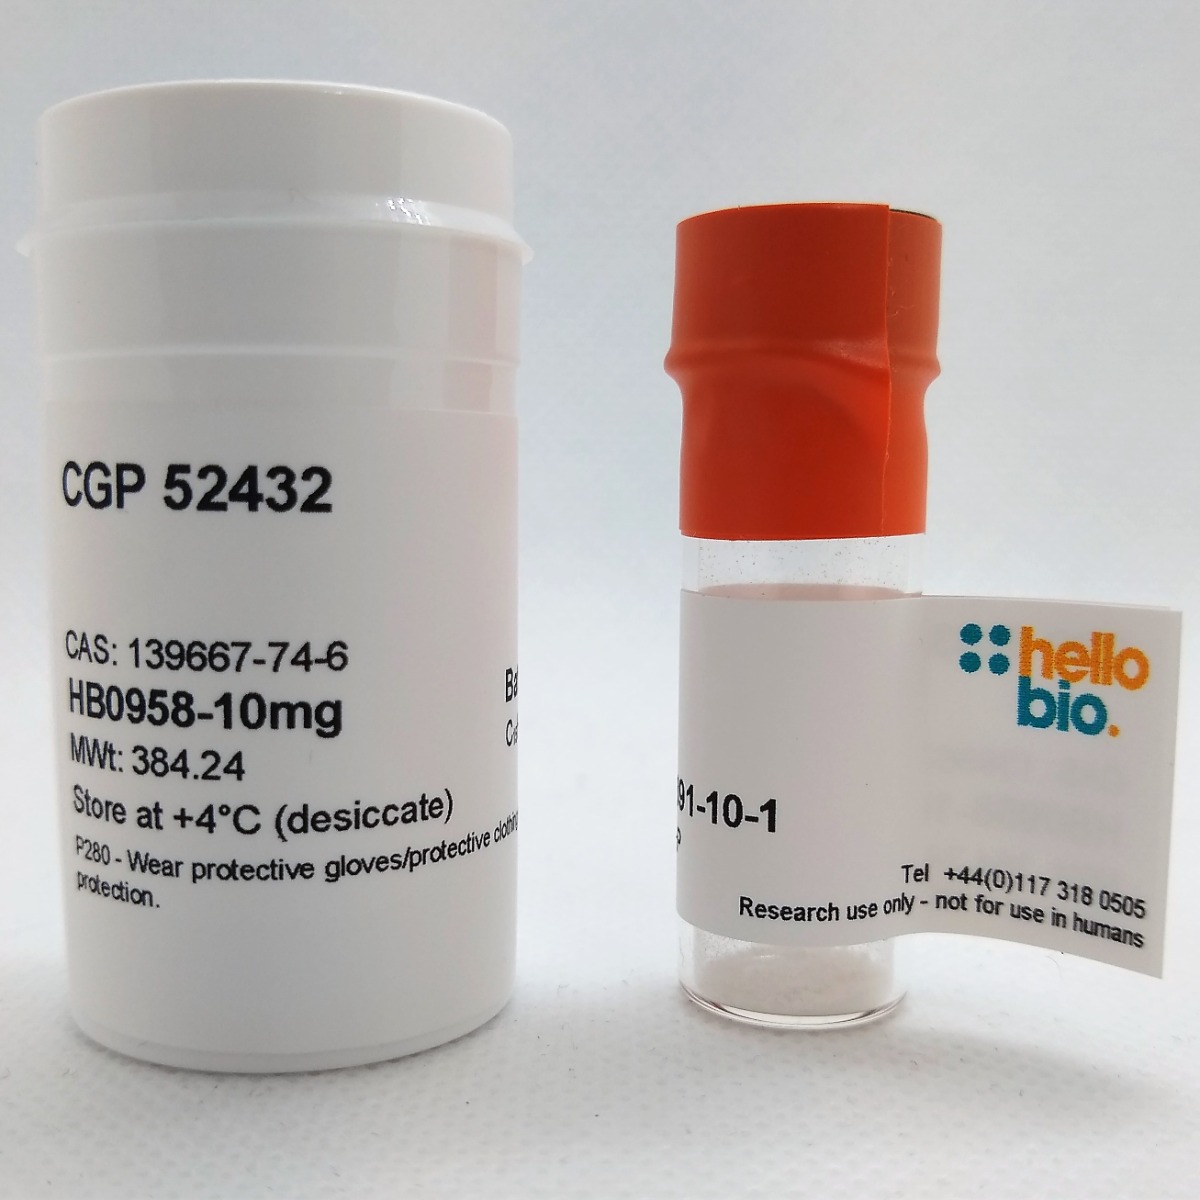 CGP 52432 product vial image | Hello Bio